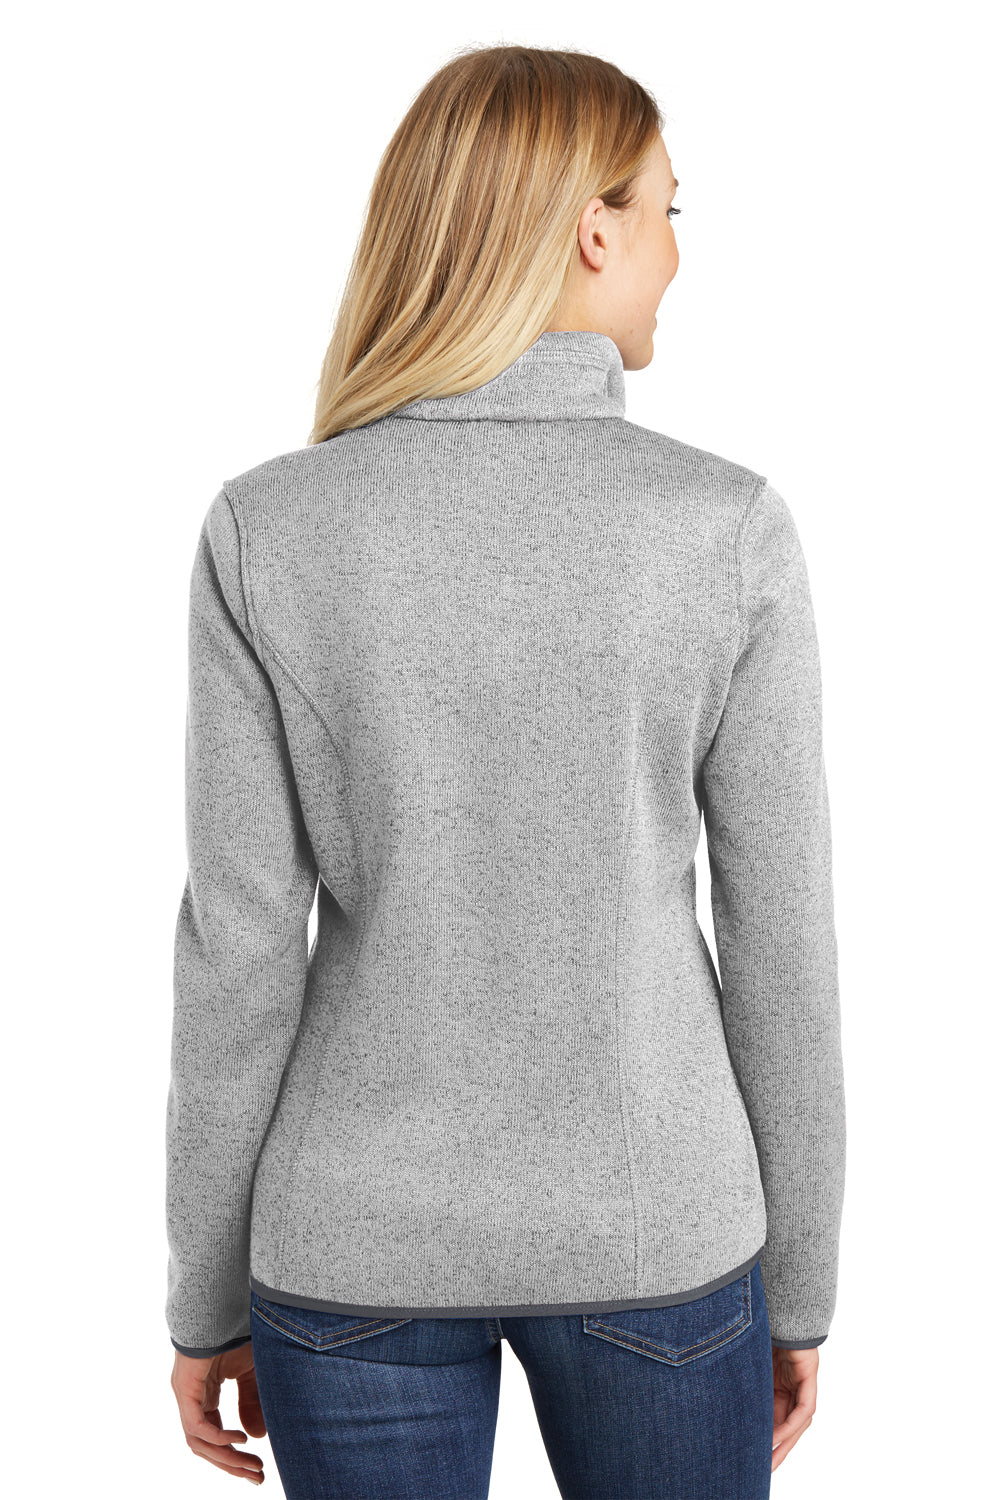 Port Authority L232 Womens Full Zip Sweater Fleece Jacket Heather Grey Back